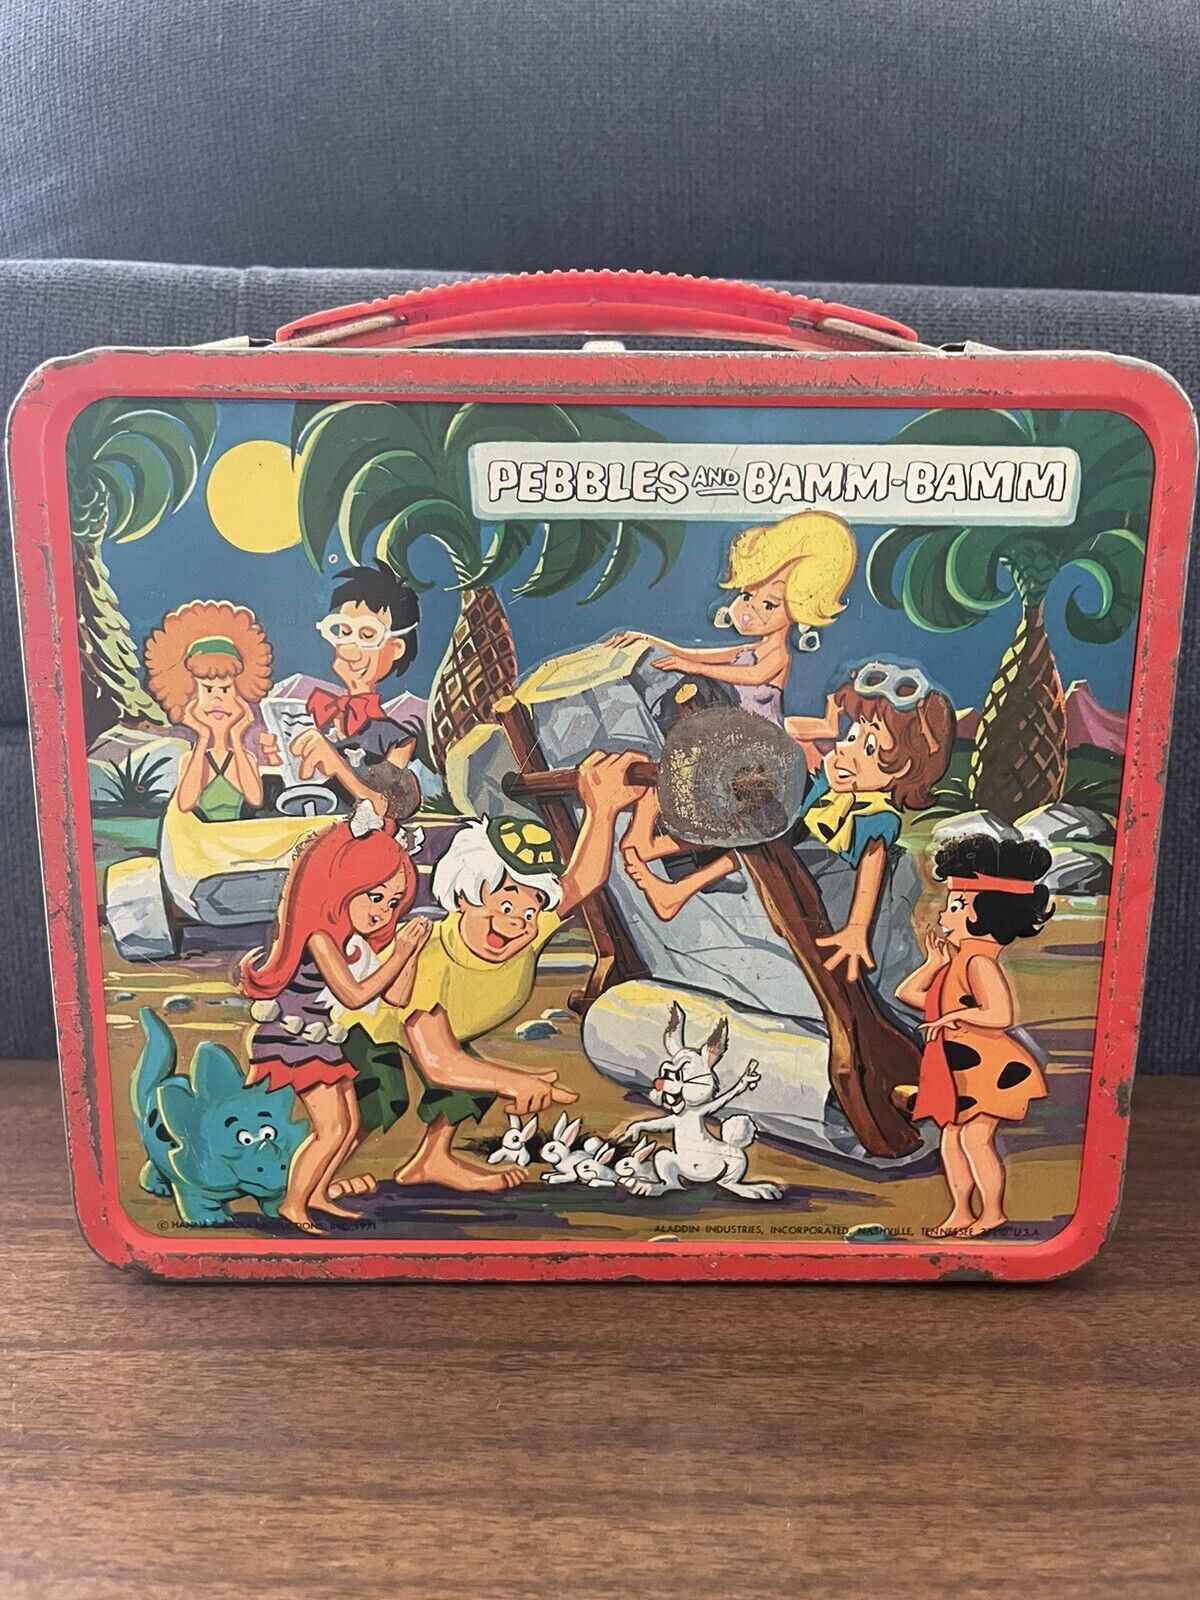 Vintage 1971 Pebbles And Bam Bam Metal Lunchbox Aladdin Inc. x Hanna-Barbera 